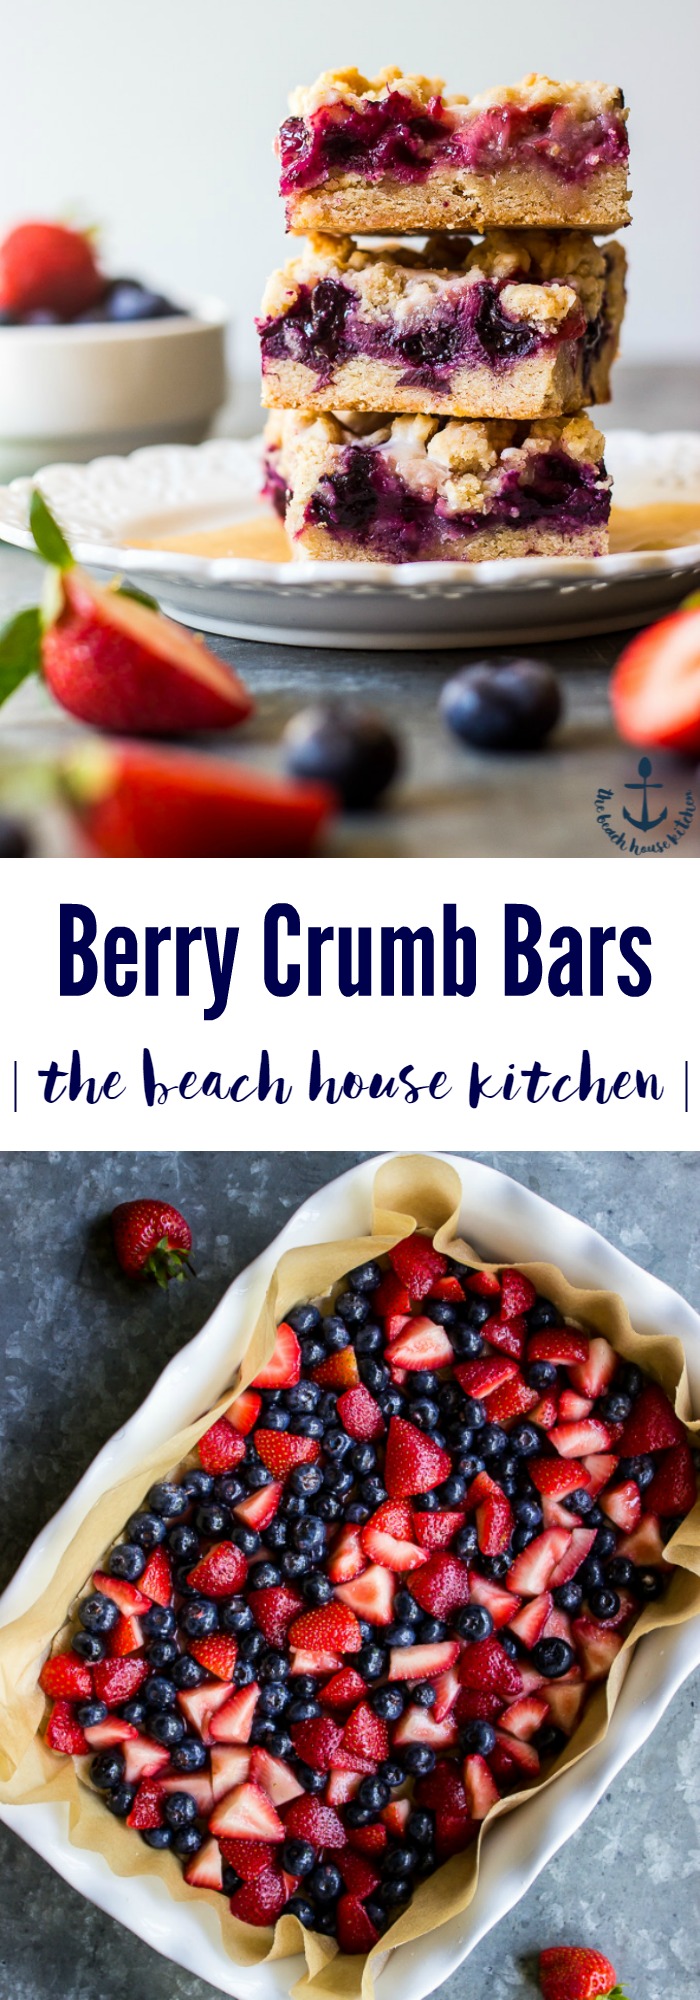 Berry Crumb Bars